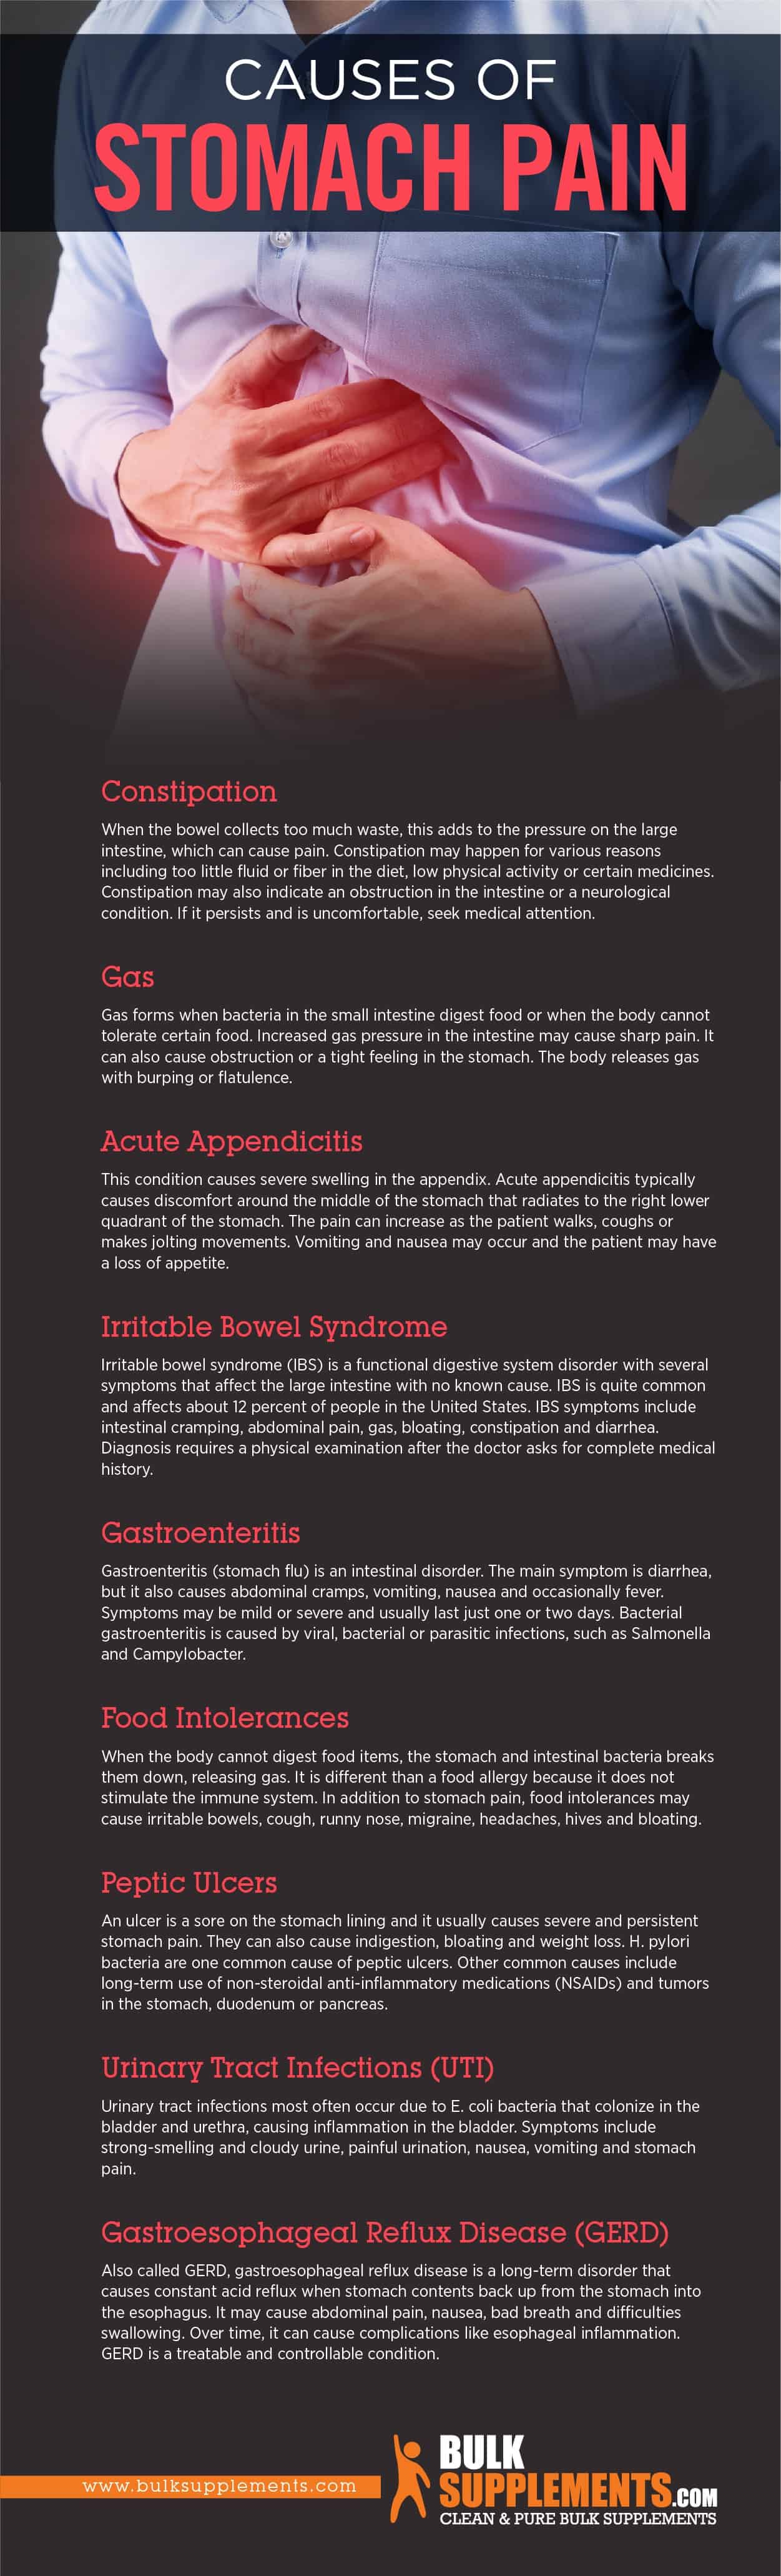 Severe Stomach Pain: Causes, Symptoms & Treatment